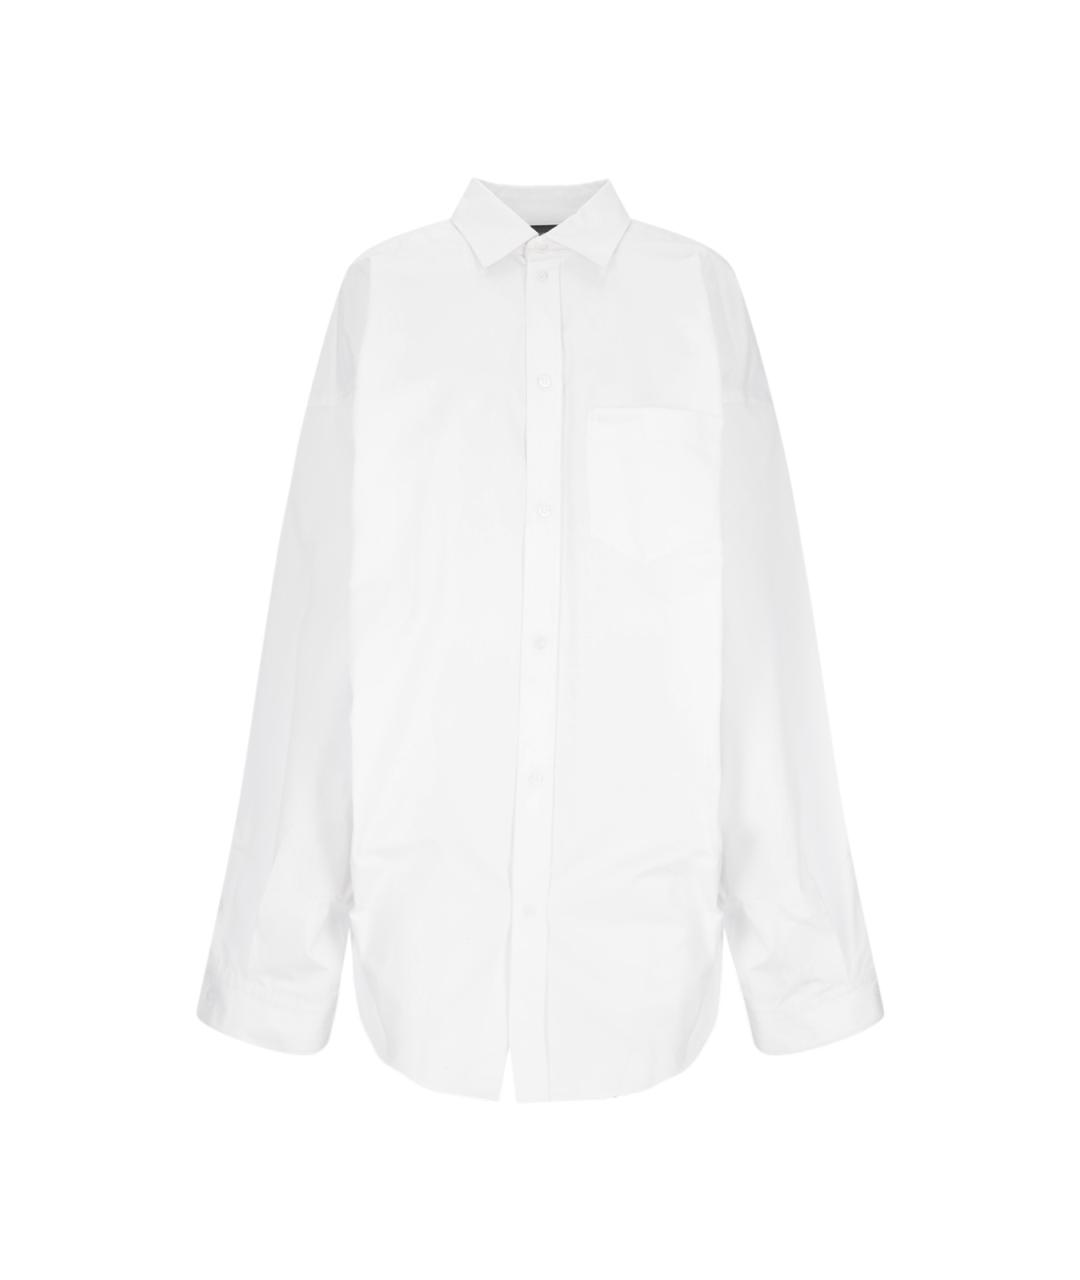 BALENCIAGA Белая хлопковая рубашка, фото 1